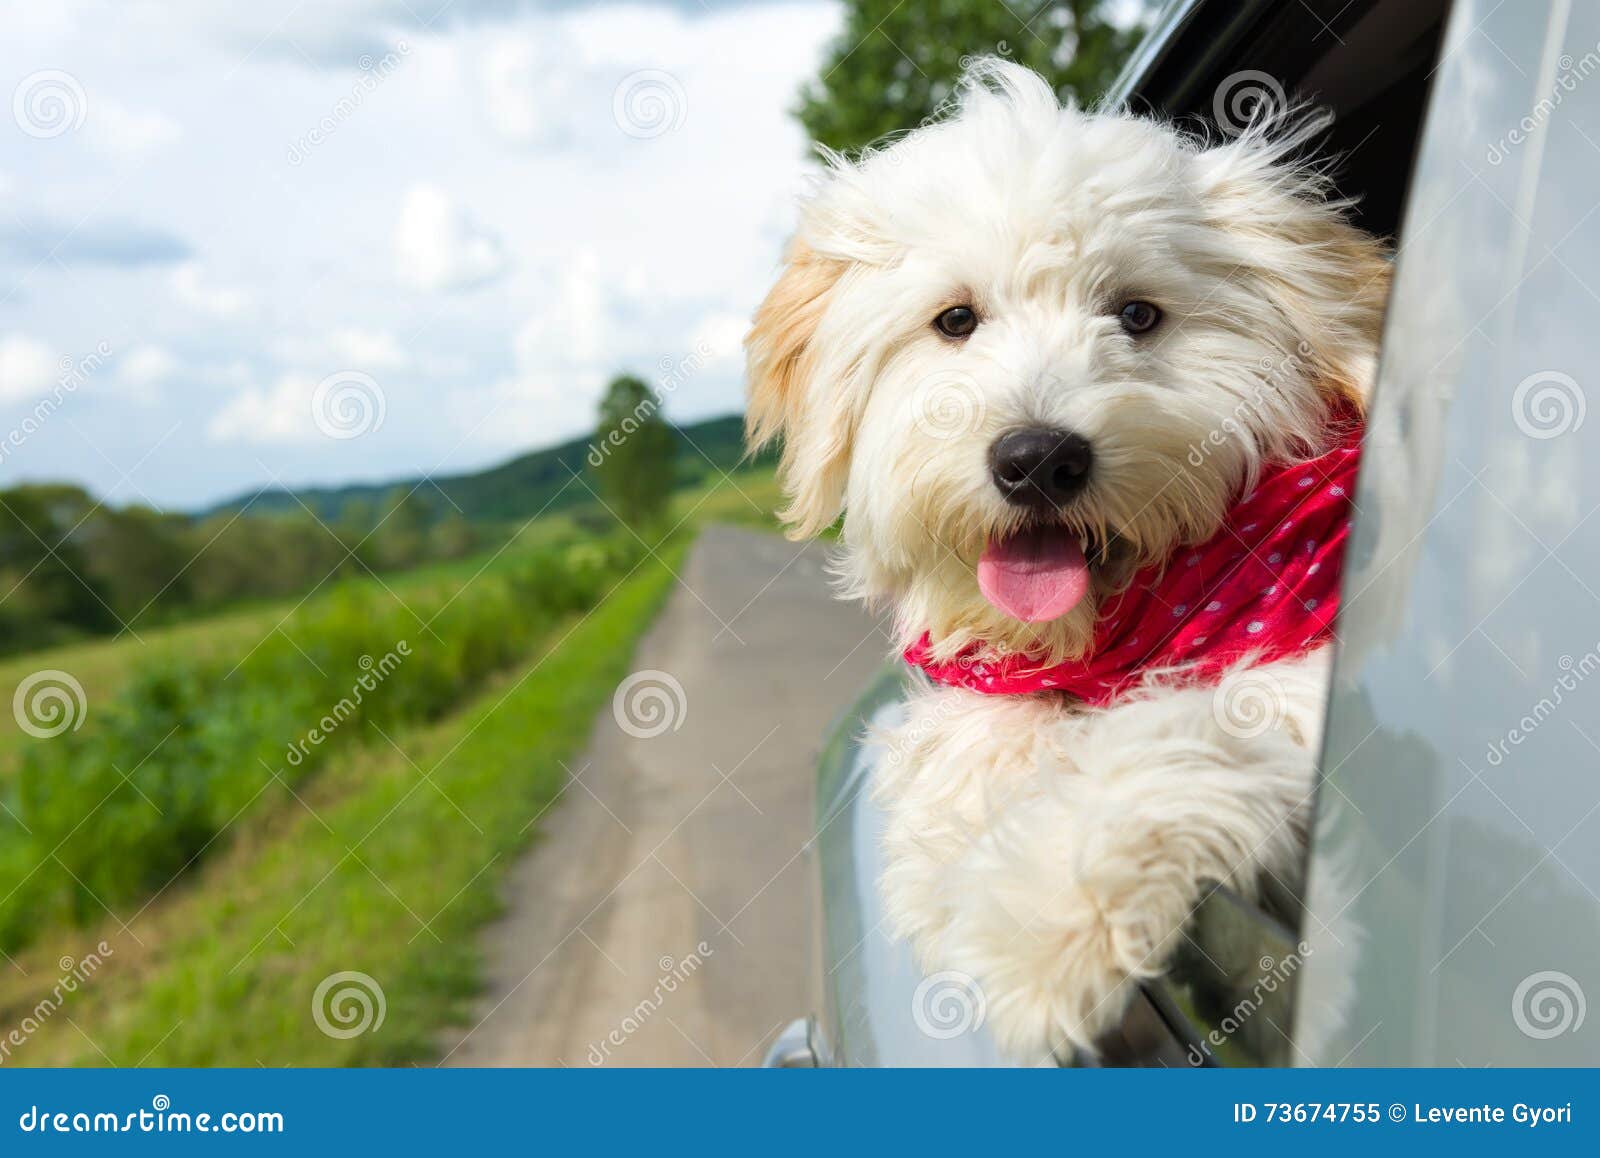 dog enjoying a ride with the car